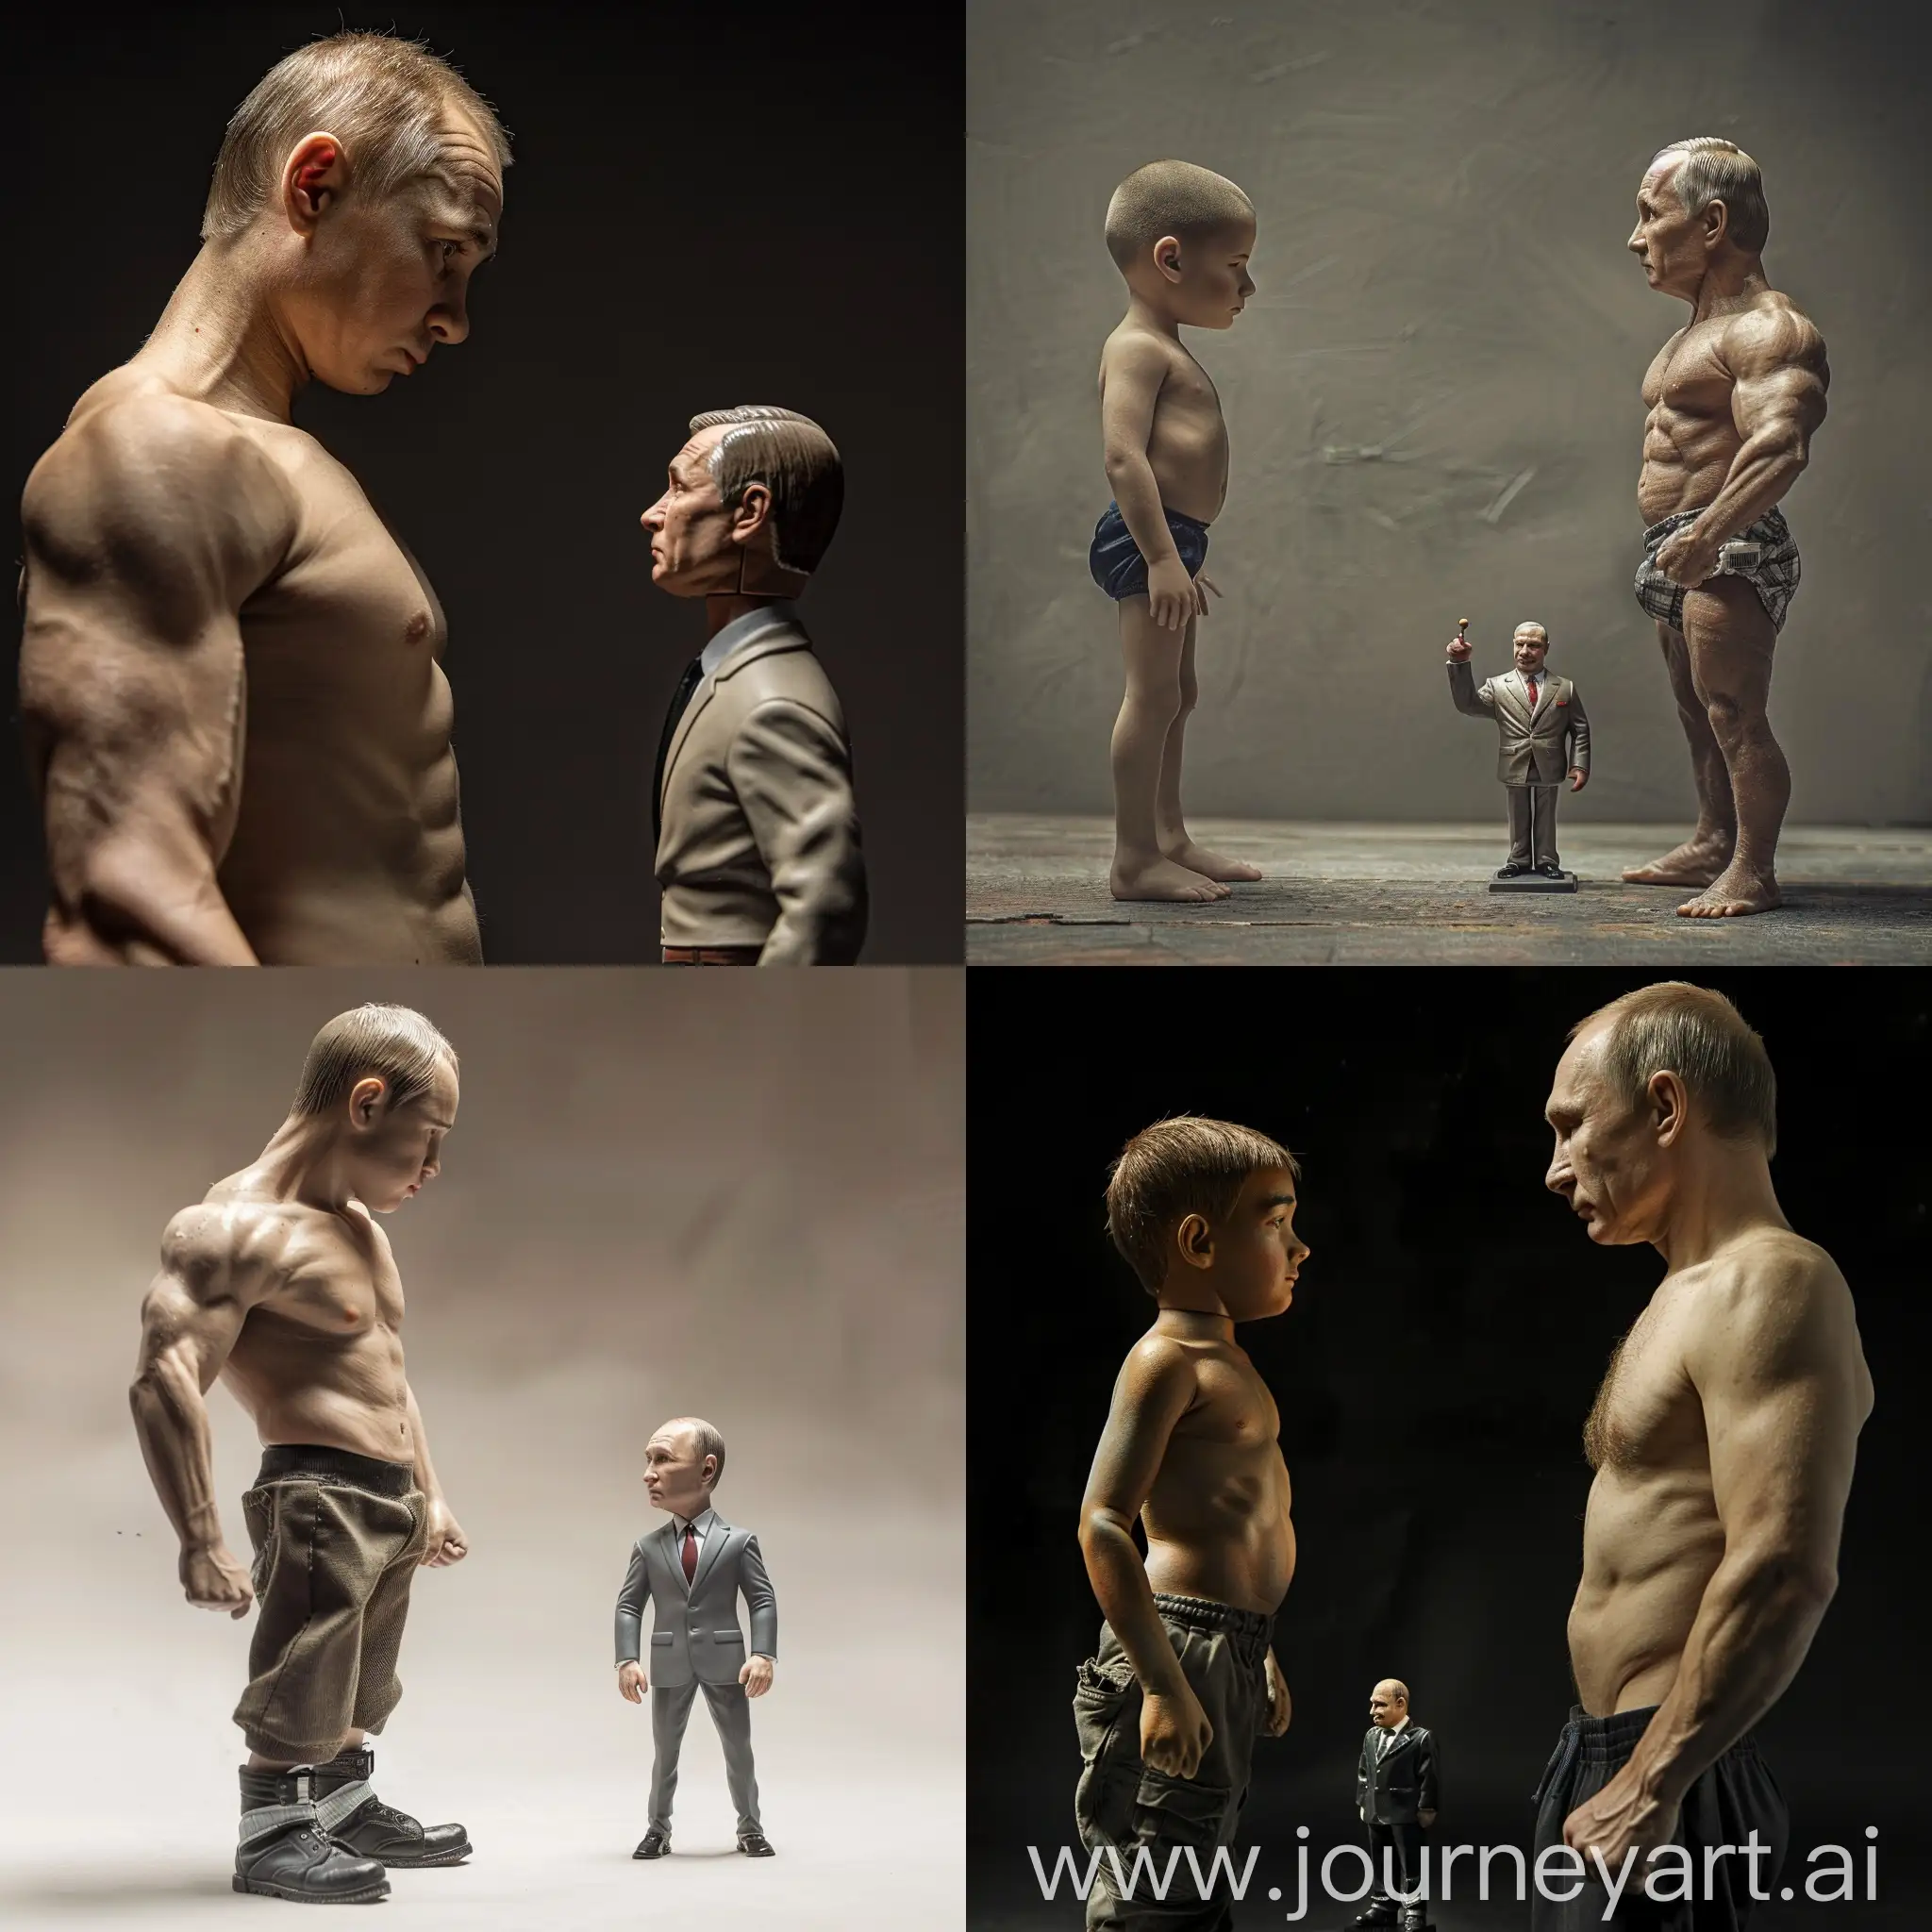 Giant-Youth-Admiring-Miniature-Putin-Statue